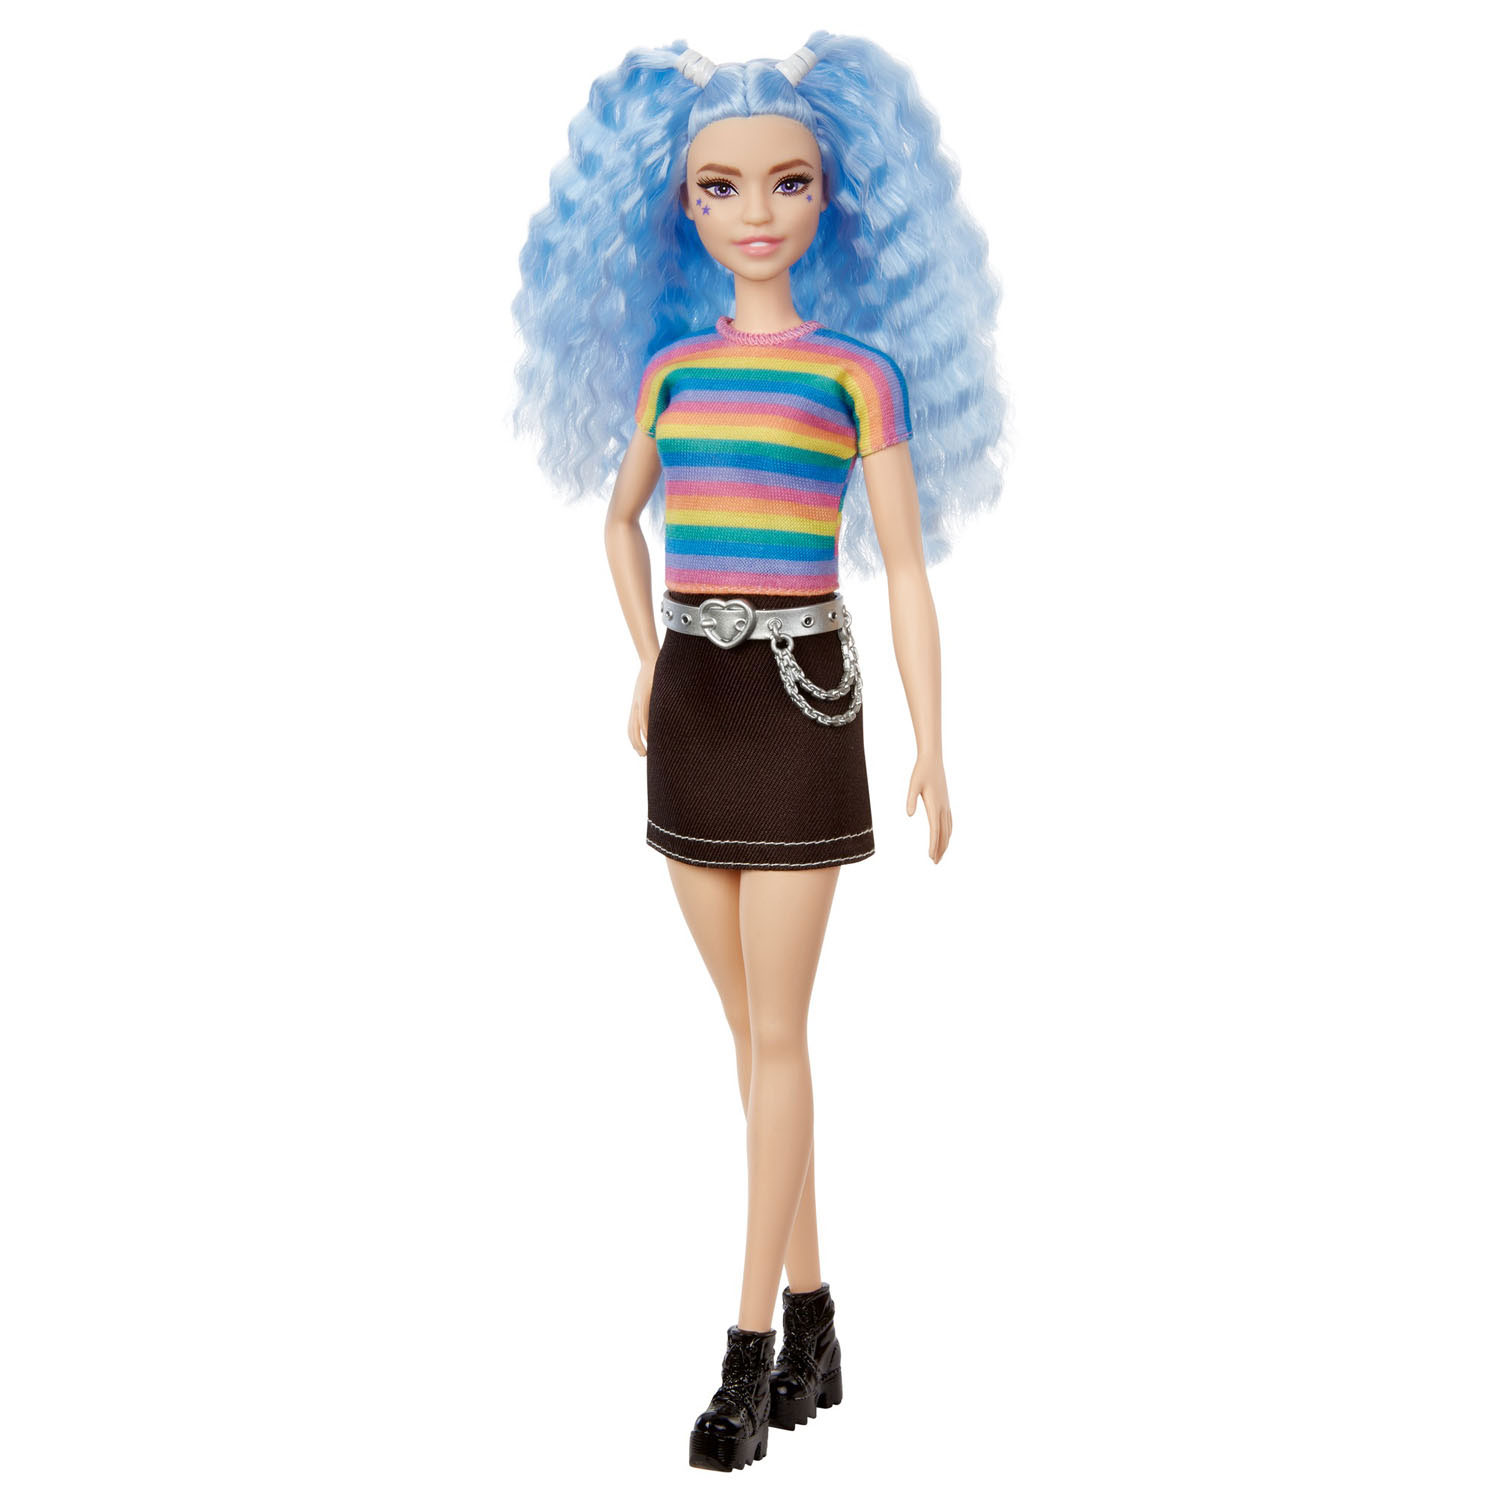 Maken Uitgestorven Baron Barbie Fashionista Doll - Rainbow Top & Black Skirt | Thimble Toys